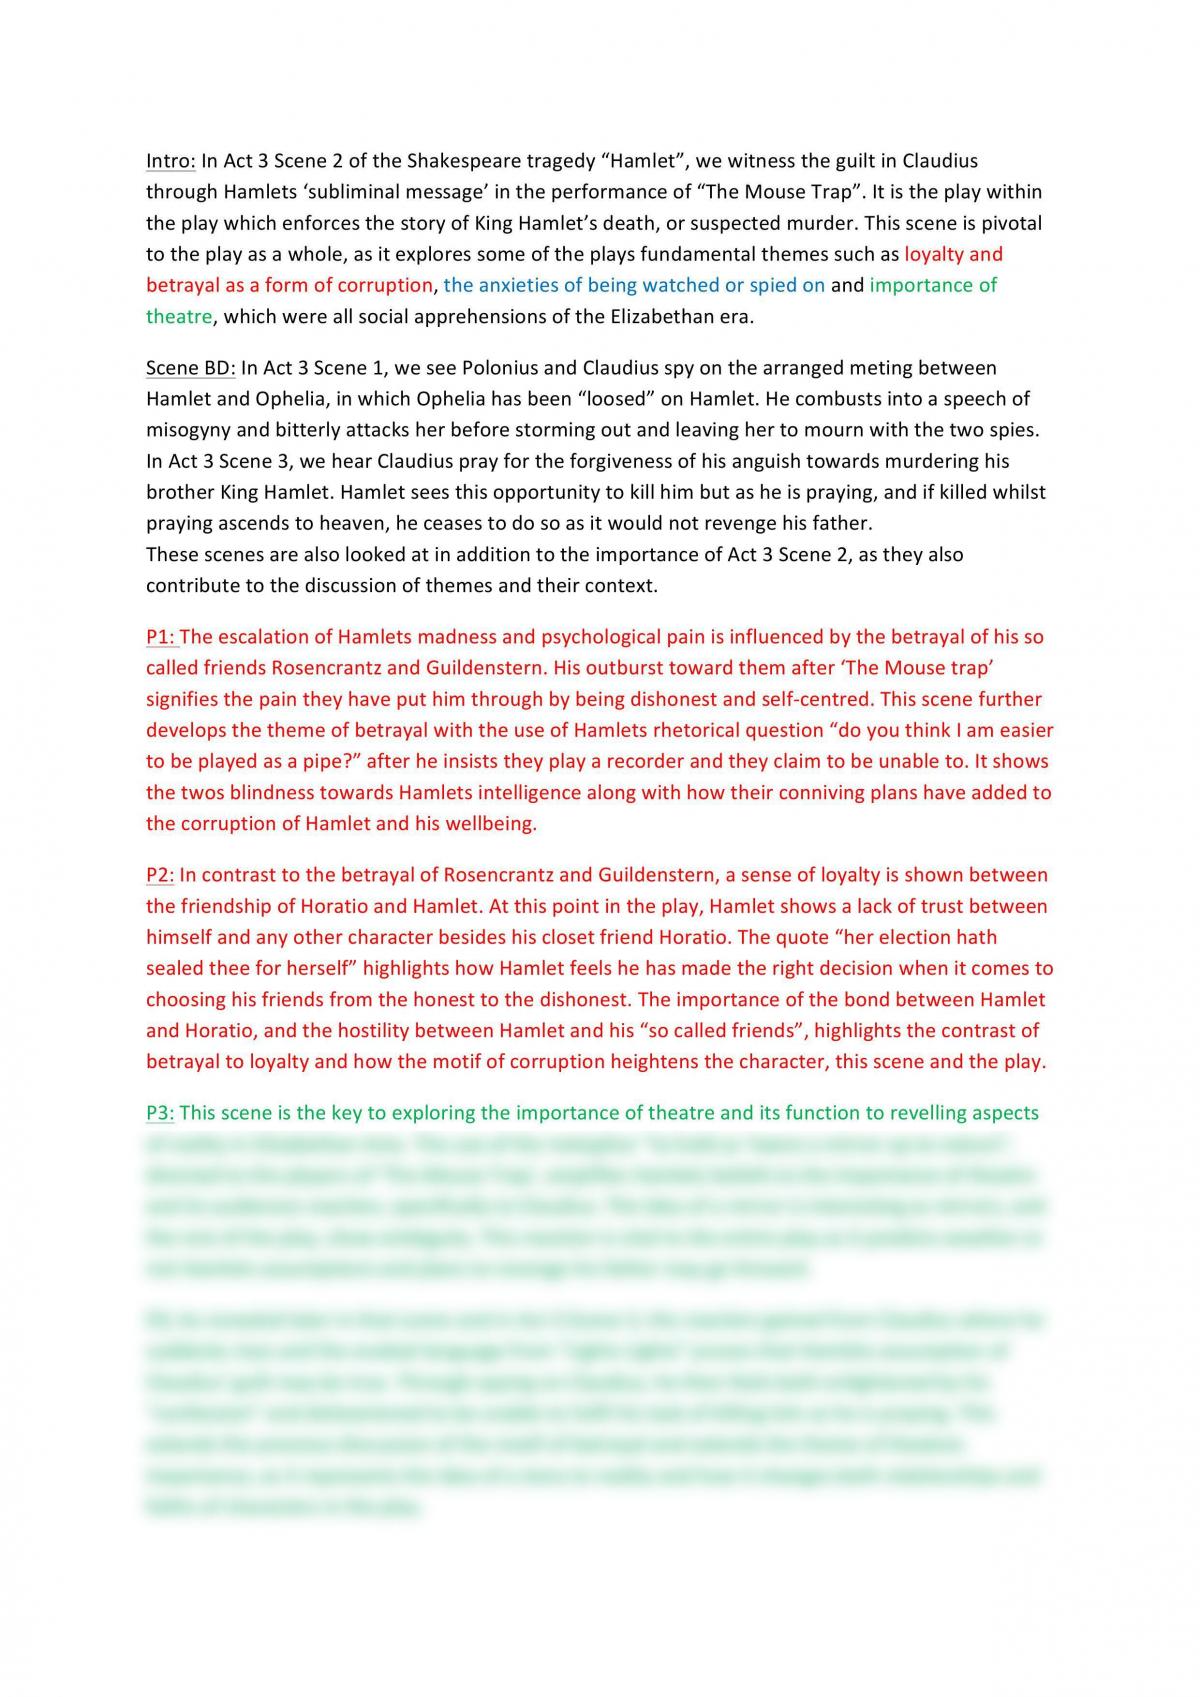 thesis statement example hamlet